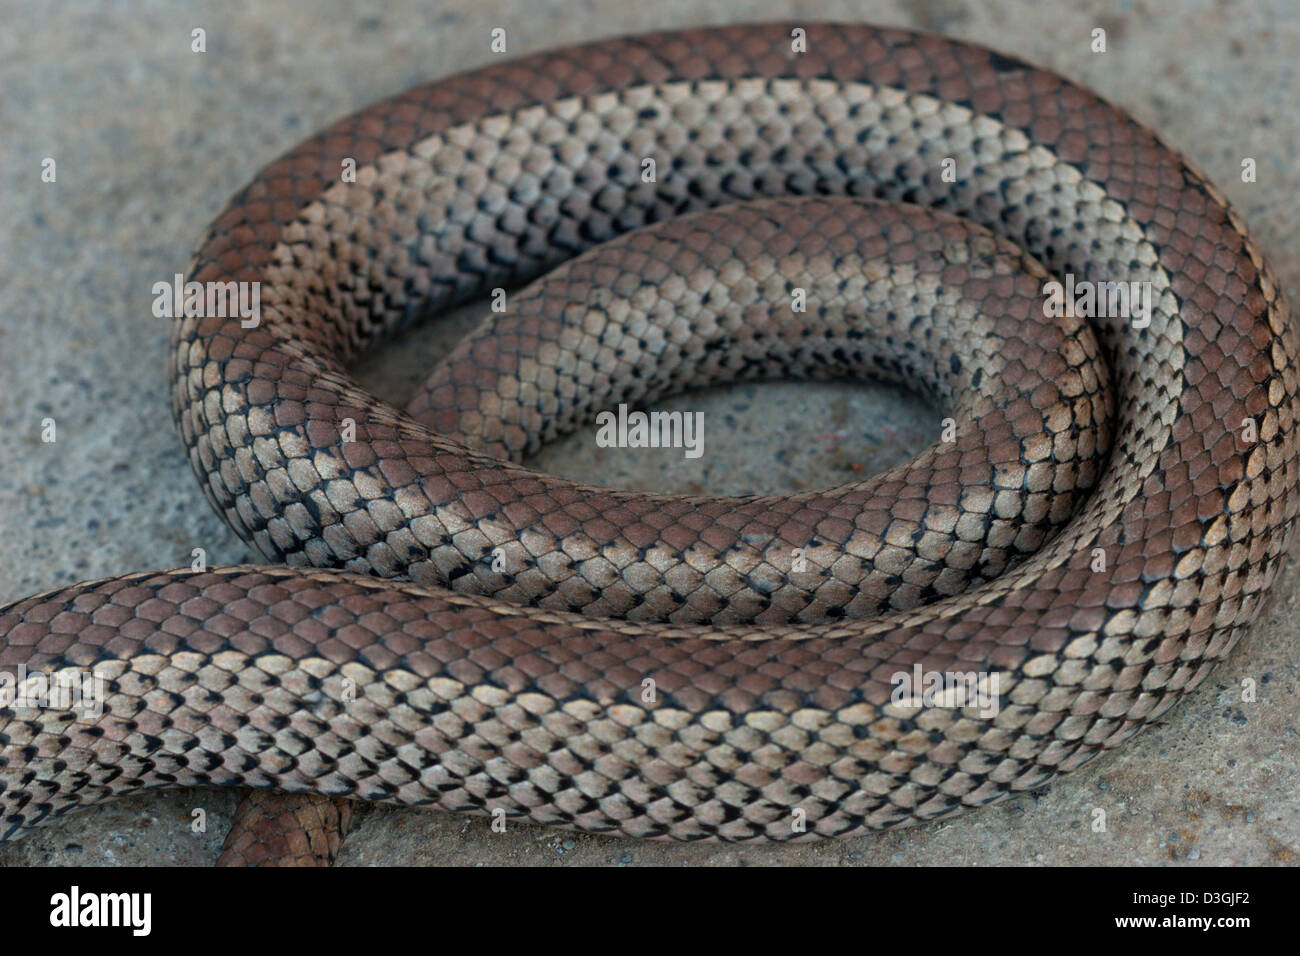 Serpent venimeux venimeux culebra con cola larga Chili Banque D'Images